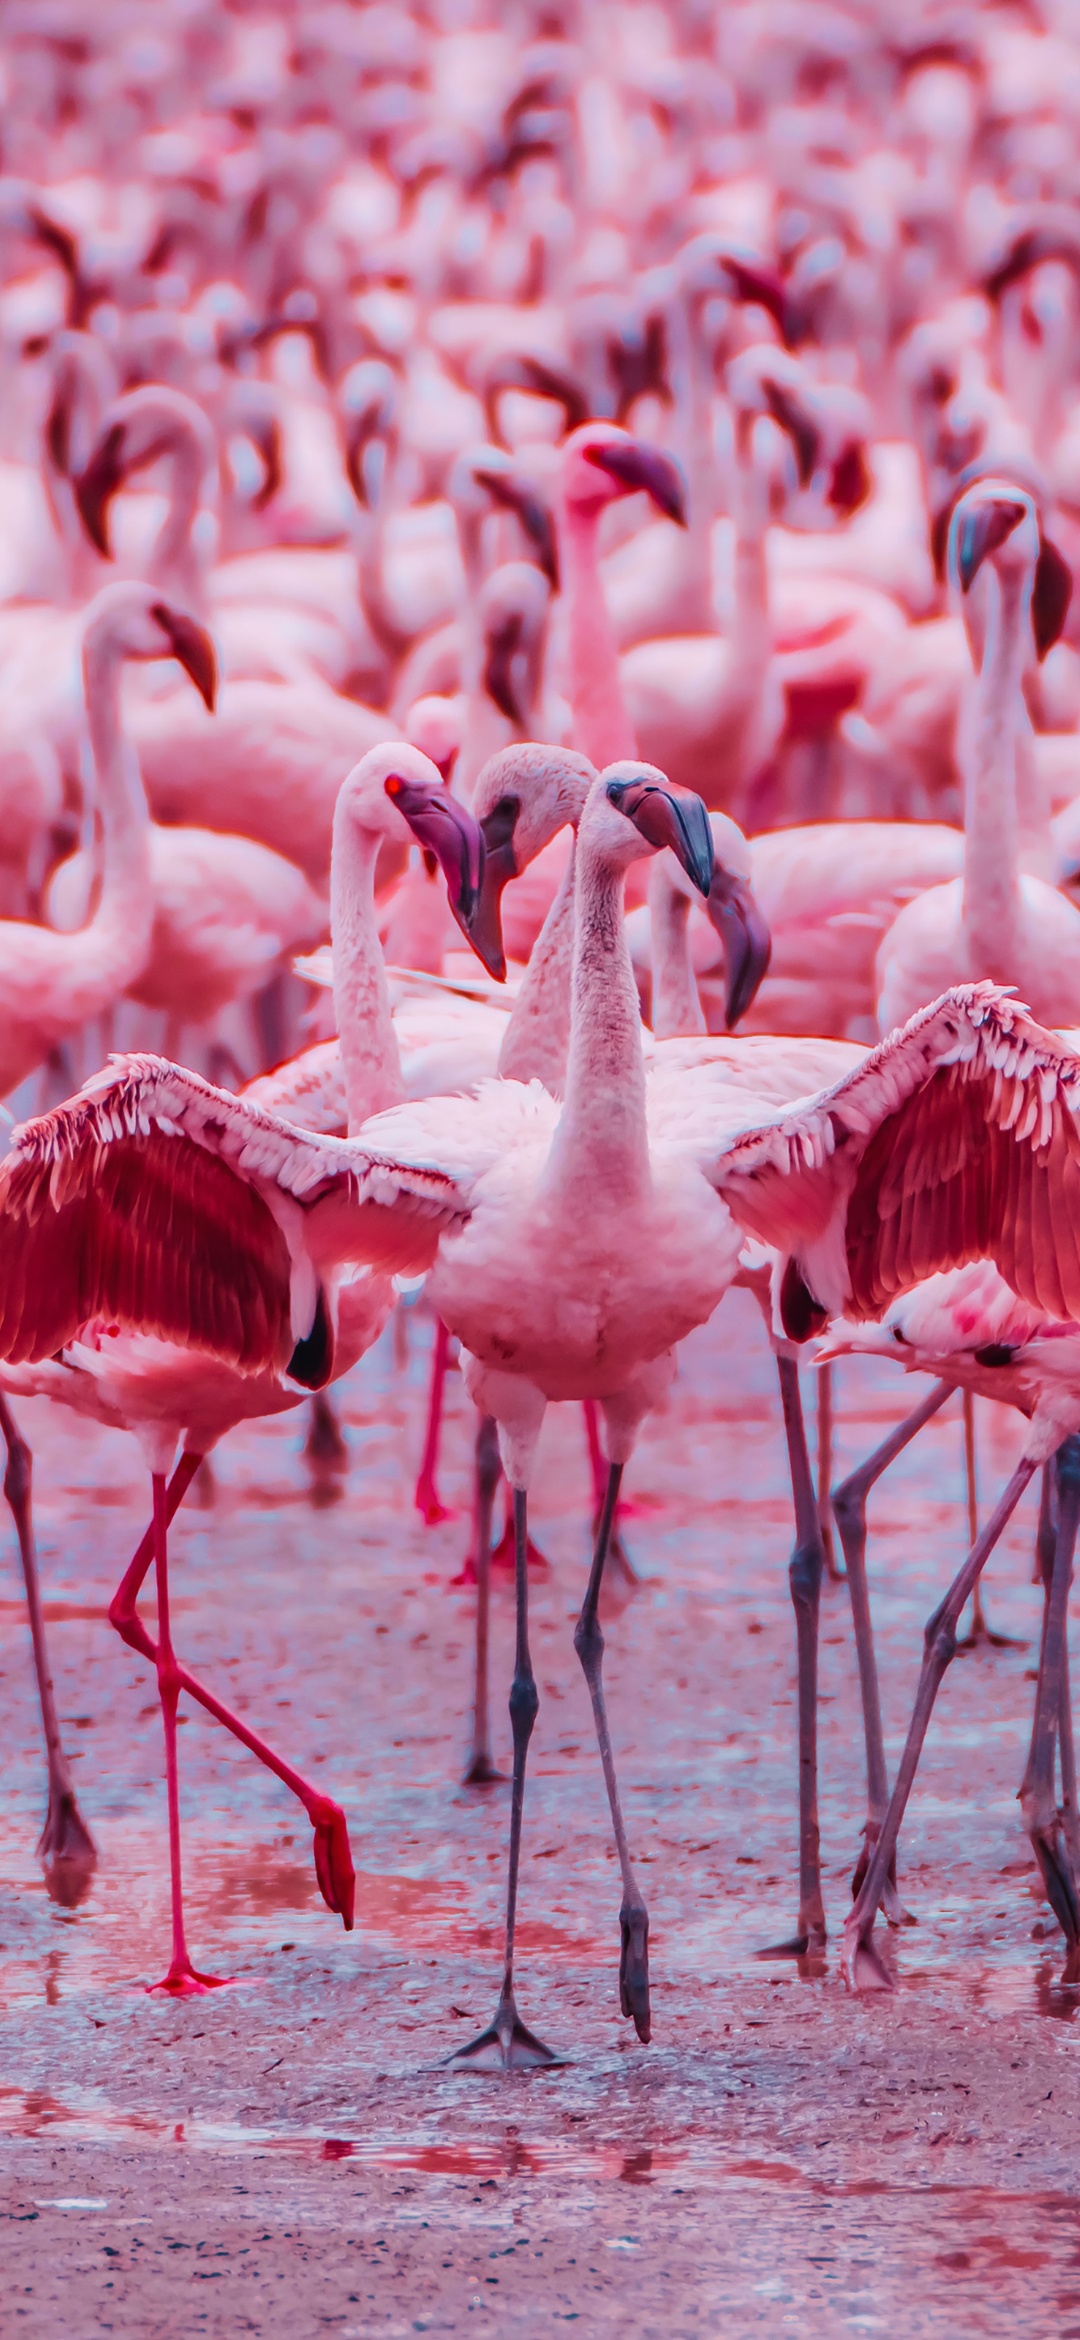 Aesthetic Pink Flamingo Bird 4K Phone Wallpaper